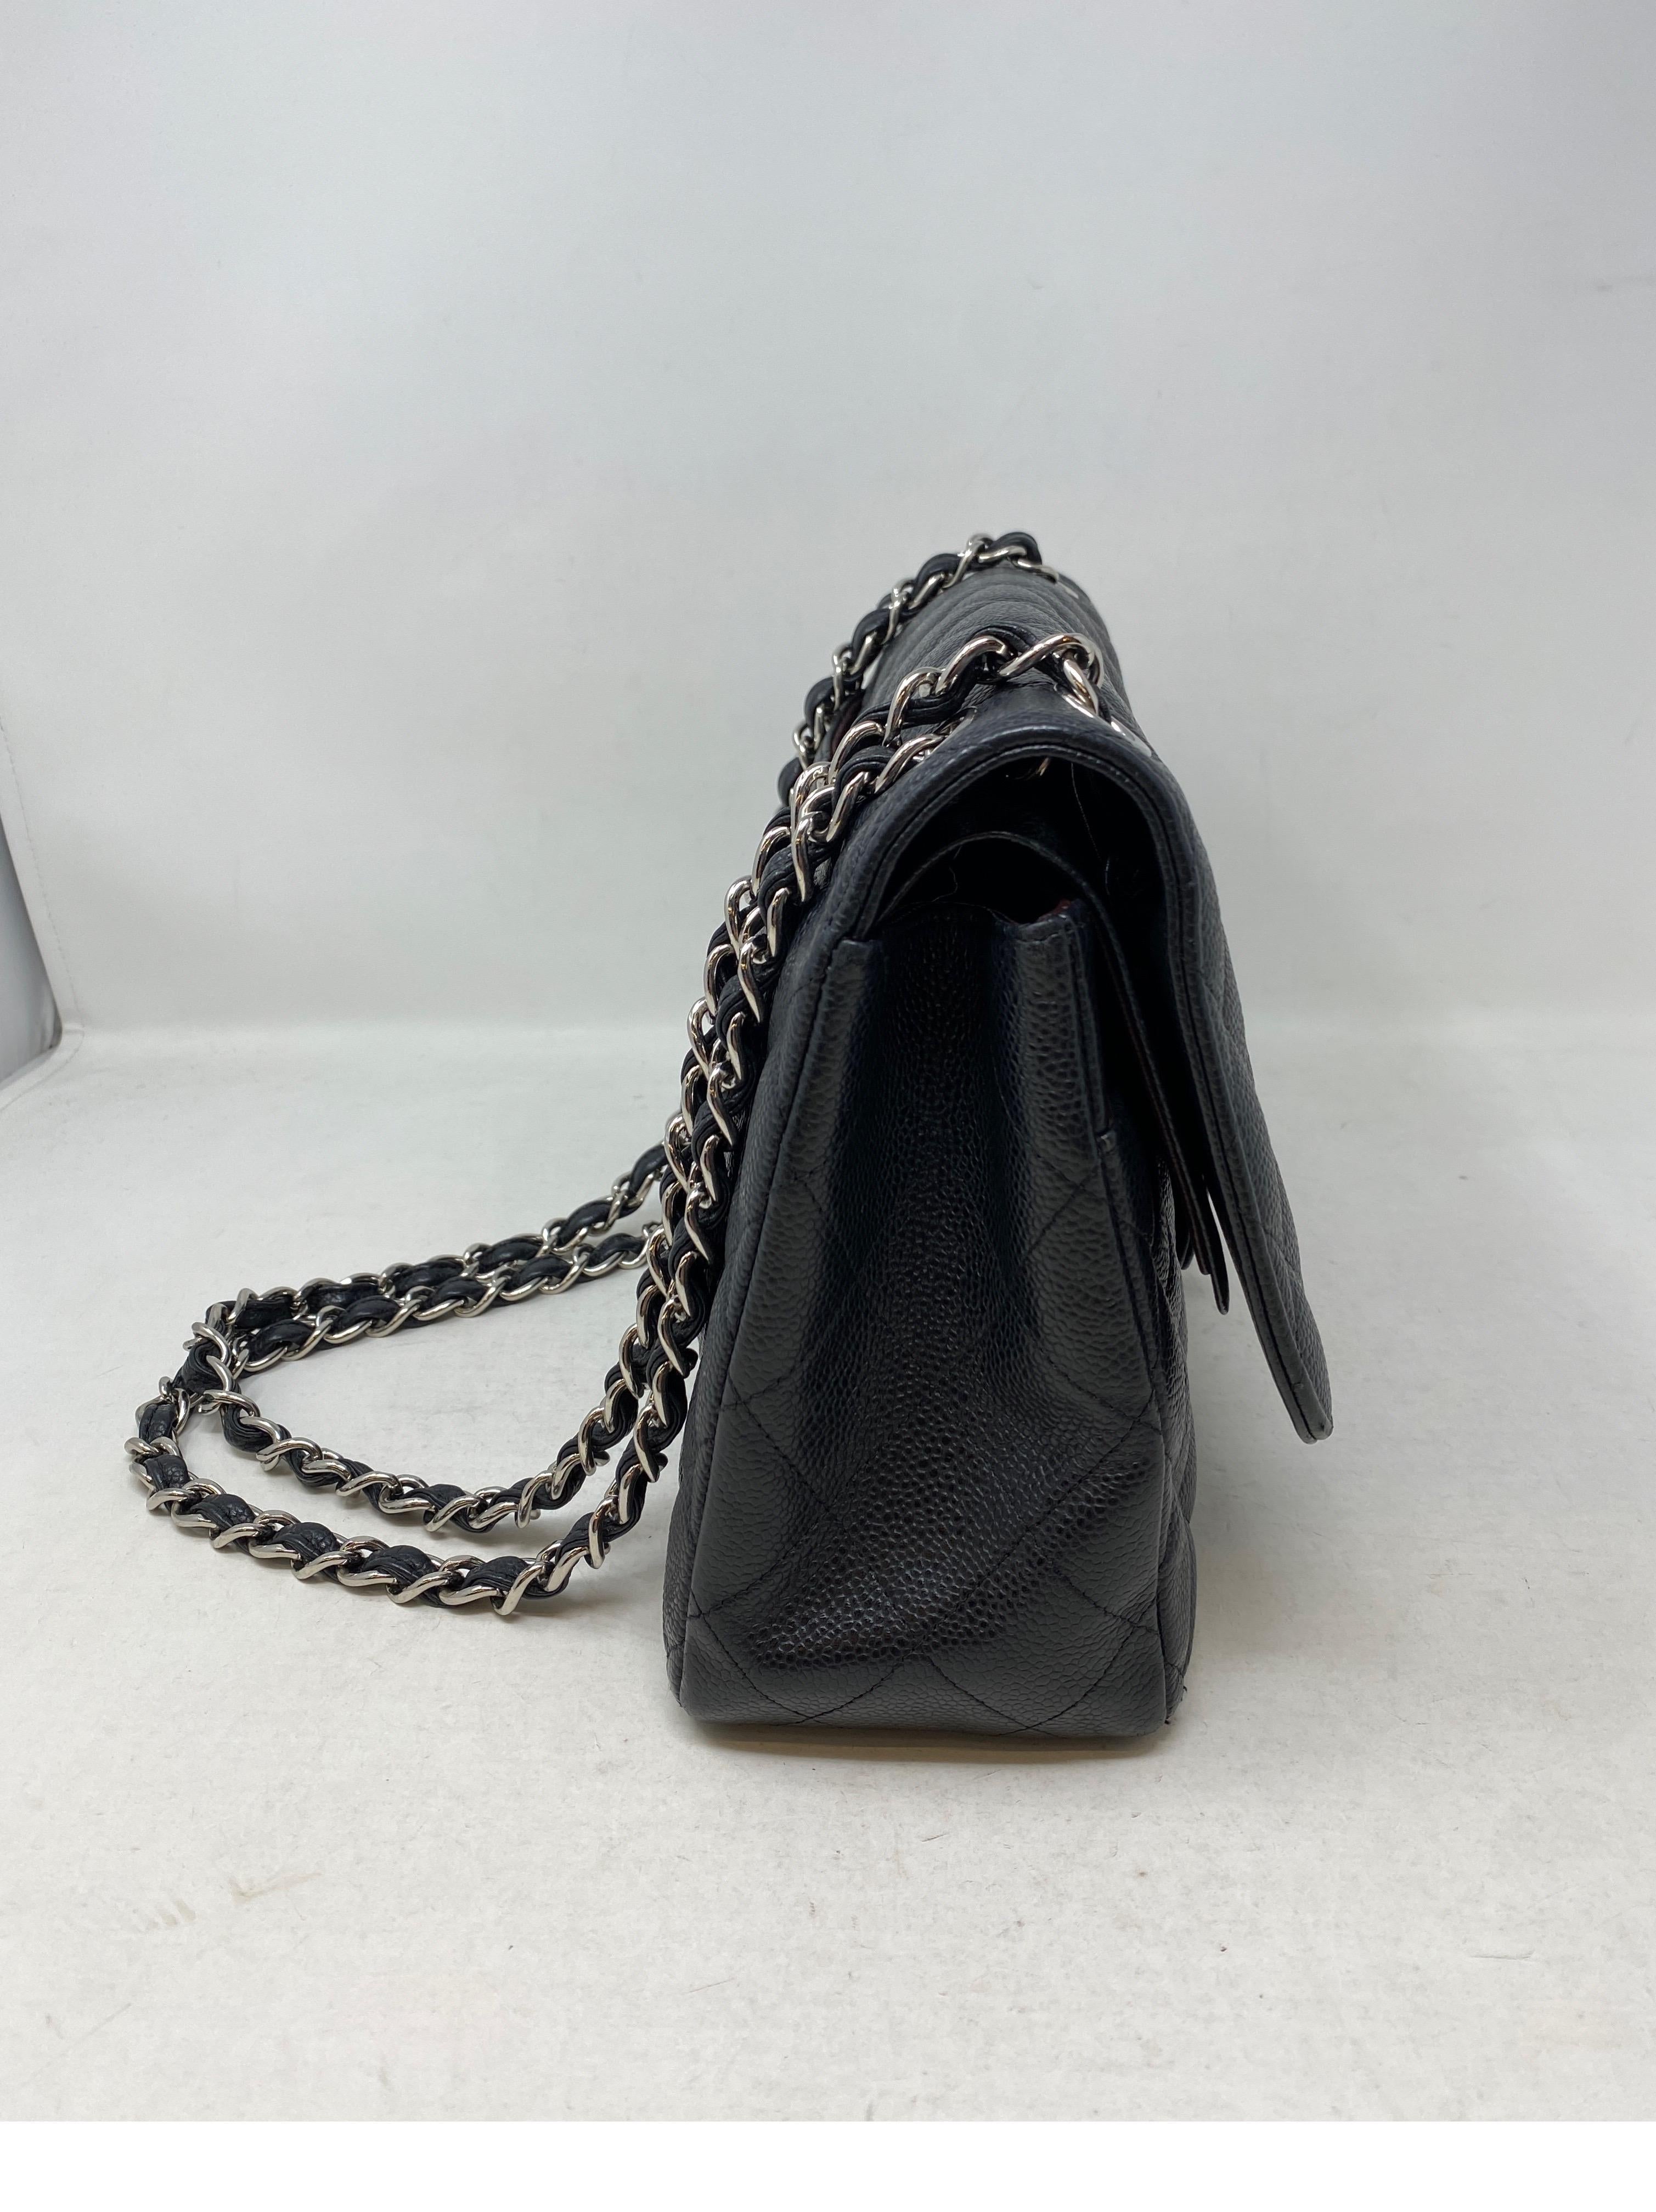 Chanel Dark Navy Jumbo Bag 8